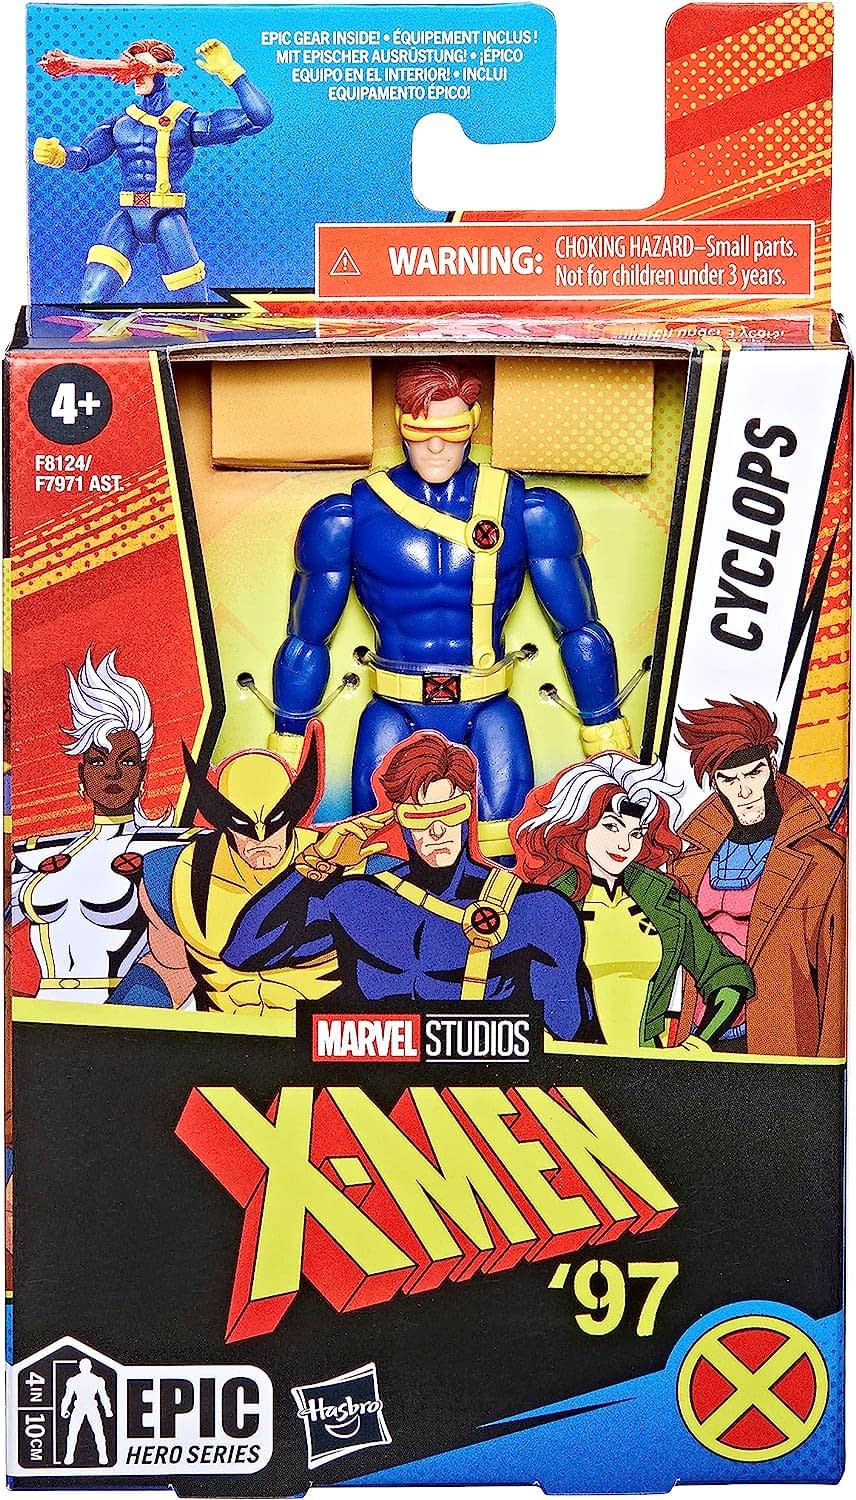 Cool Stuff: The Next Wave Of X-Men '97 Action Figures Reveals New